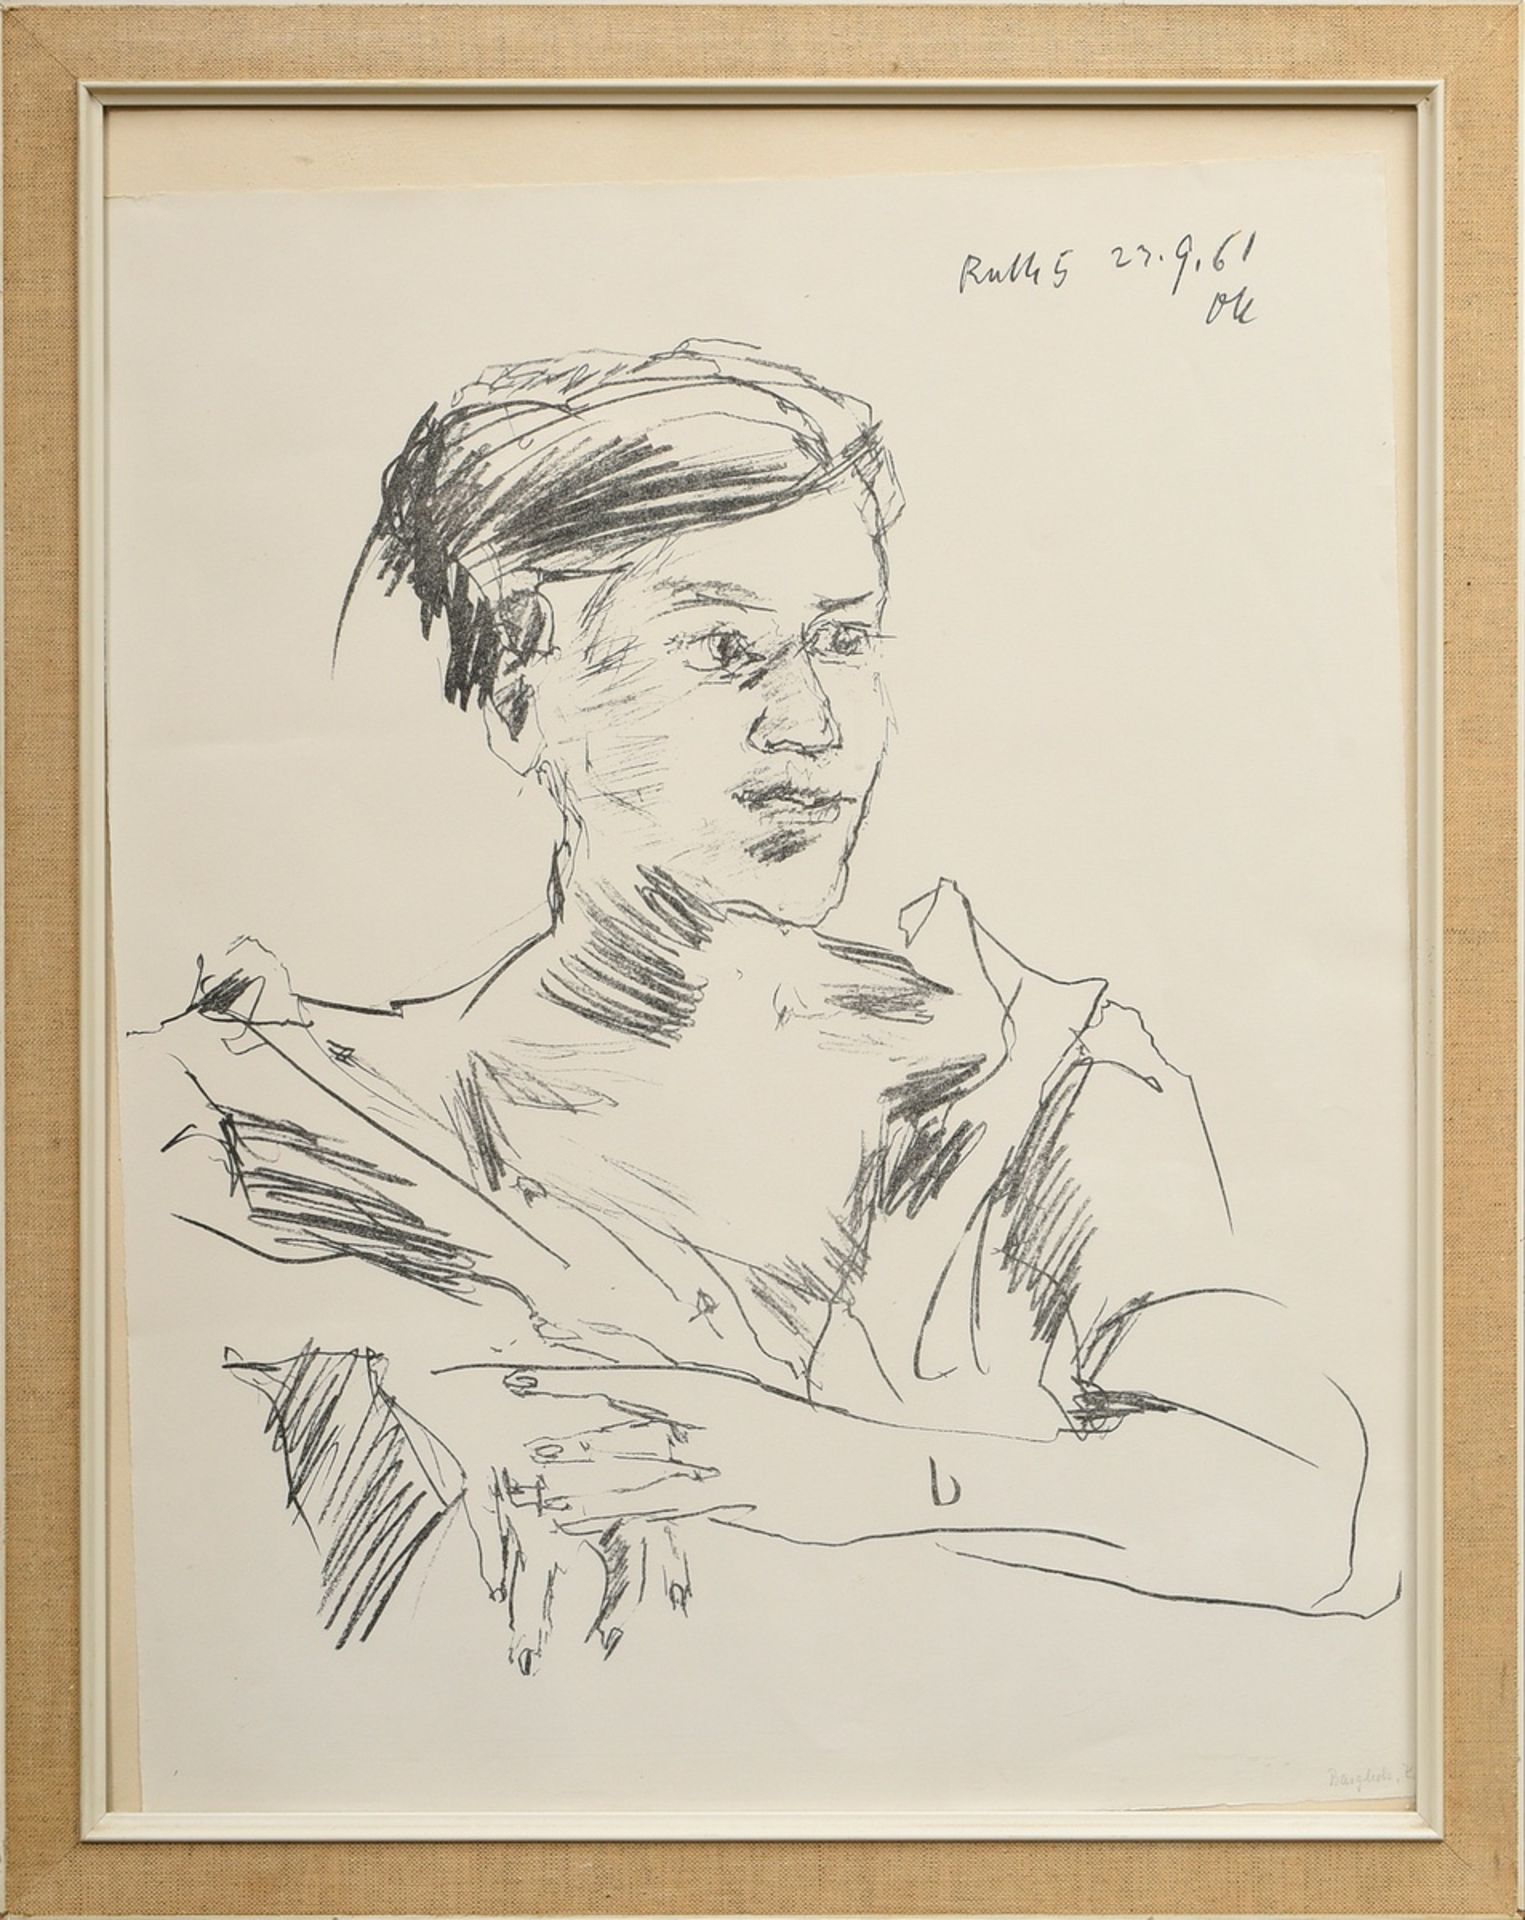 Kokoschka, Oscar (1886-1980) "Ruth 5" 1961, lithograph, monogr./dat./titl. in stone, SM 62.5x49.5cm - Image 2 of 3